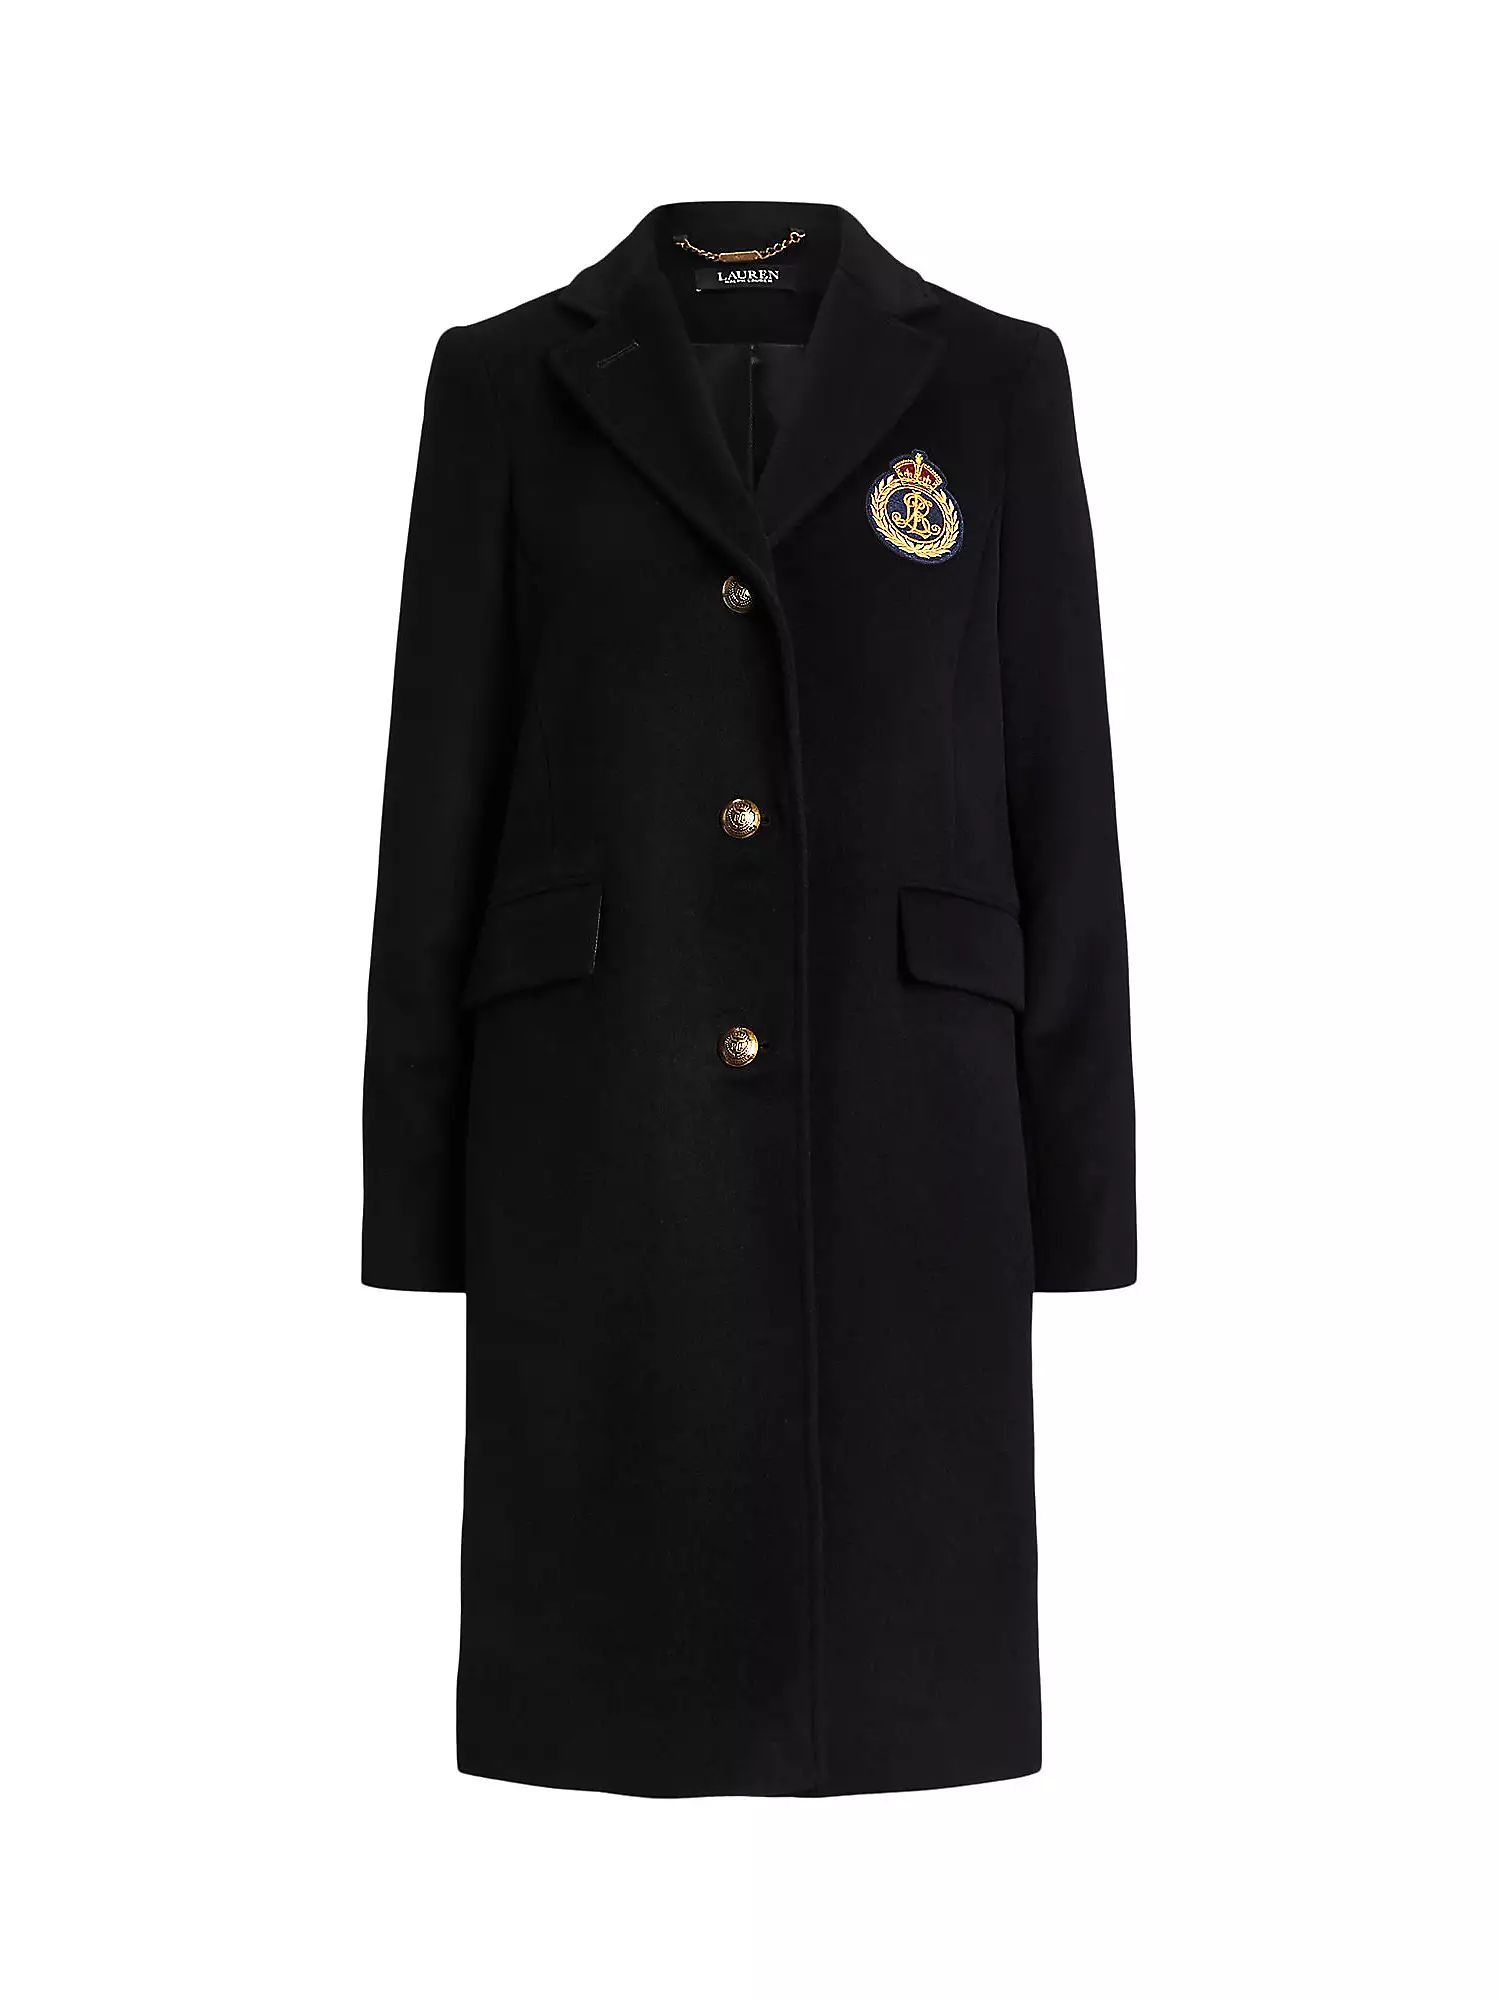 Ralph Lauren Crest Cashmere Blend Coat, Black | John Lewis (UK)